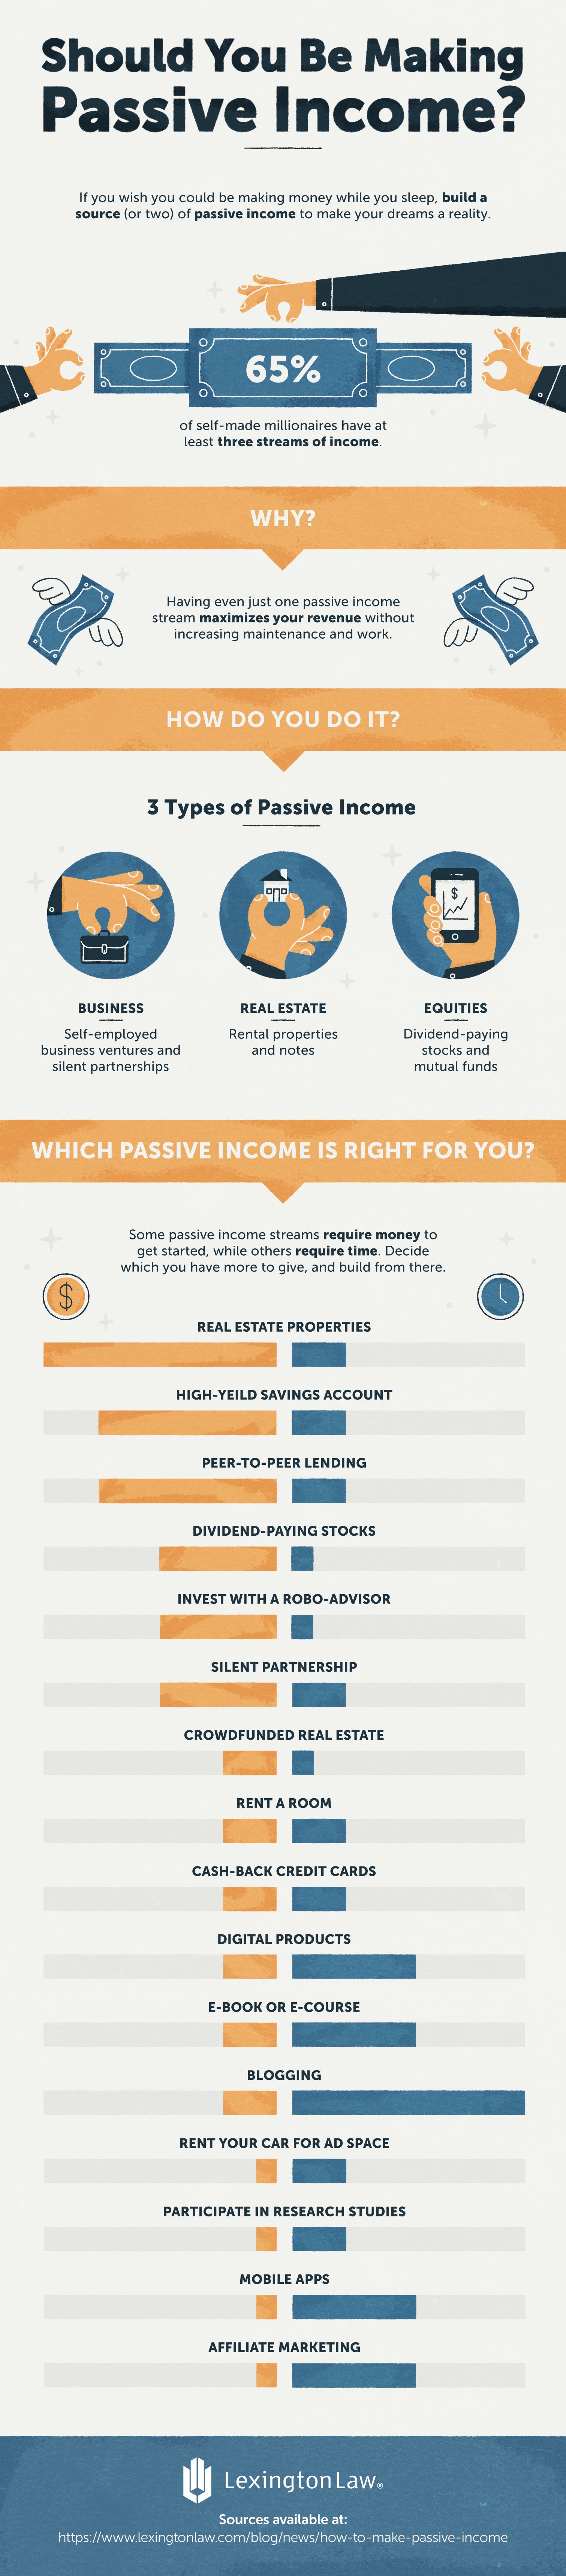 How to Make a Passive Income